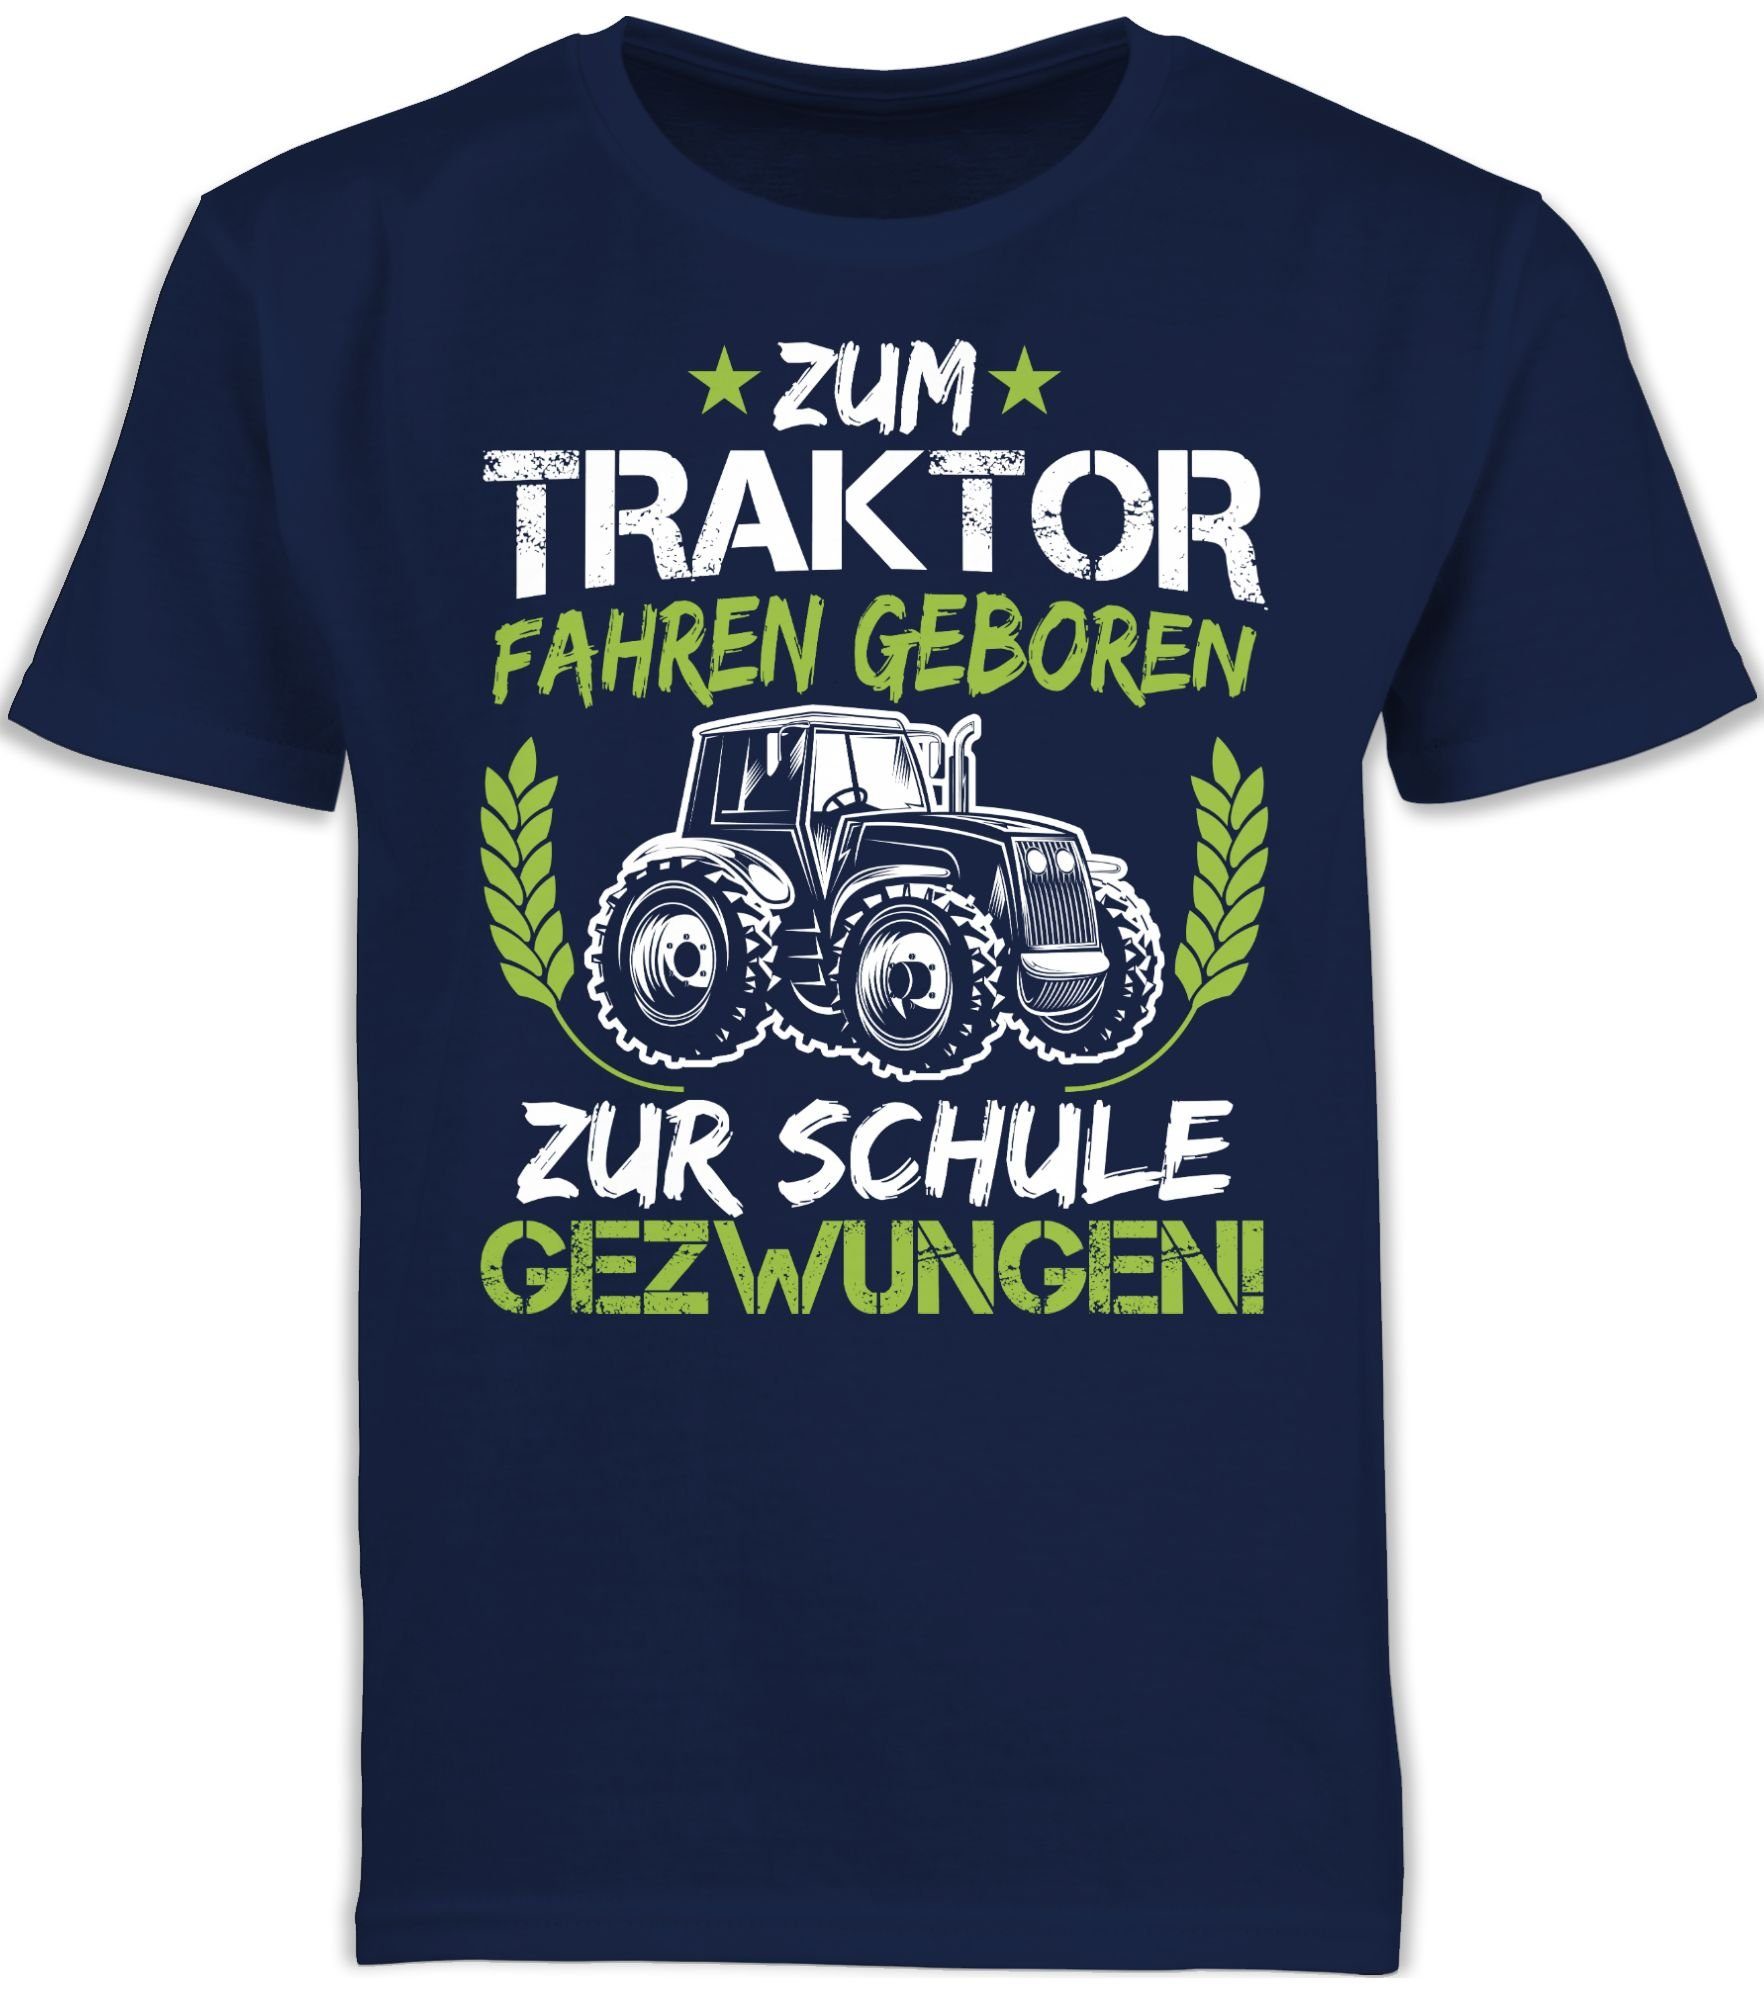 Geschenke 1 Traktor Blau Shirtracer Schulanfang Einschulung fahren Junge Schule Grün/Weiß zur gezwungen geboren Zum T-Shirt Navy